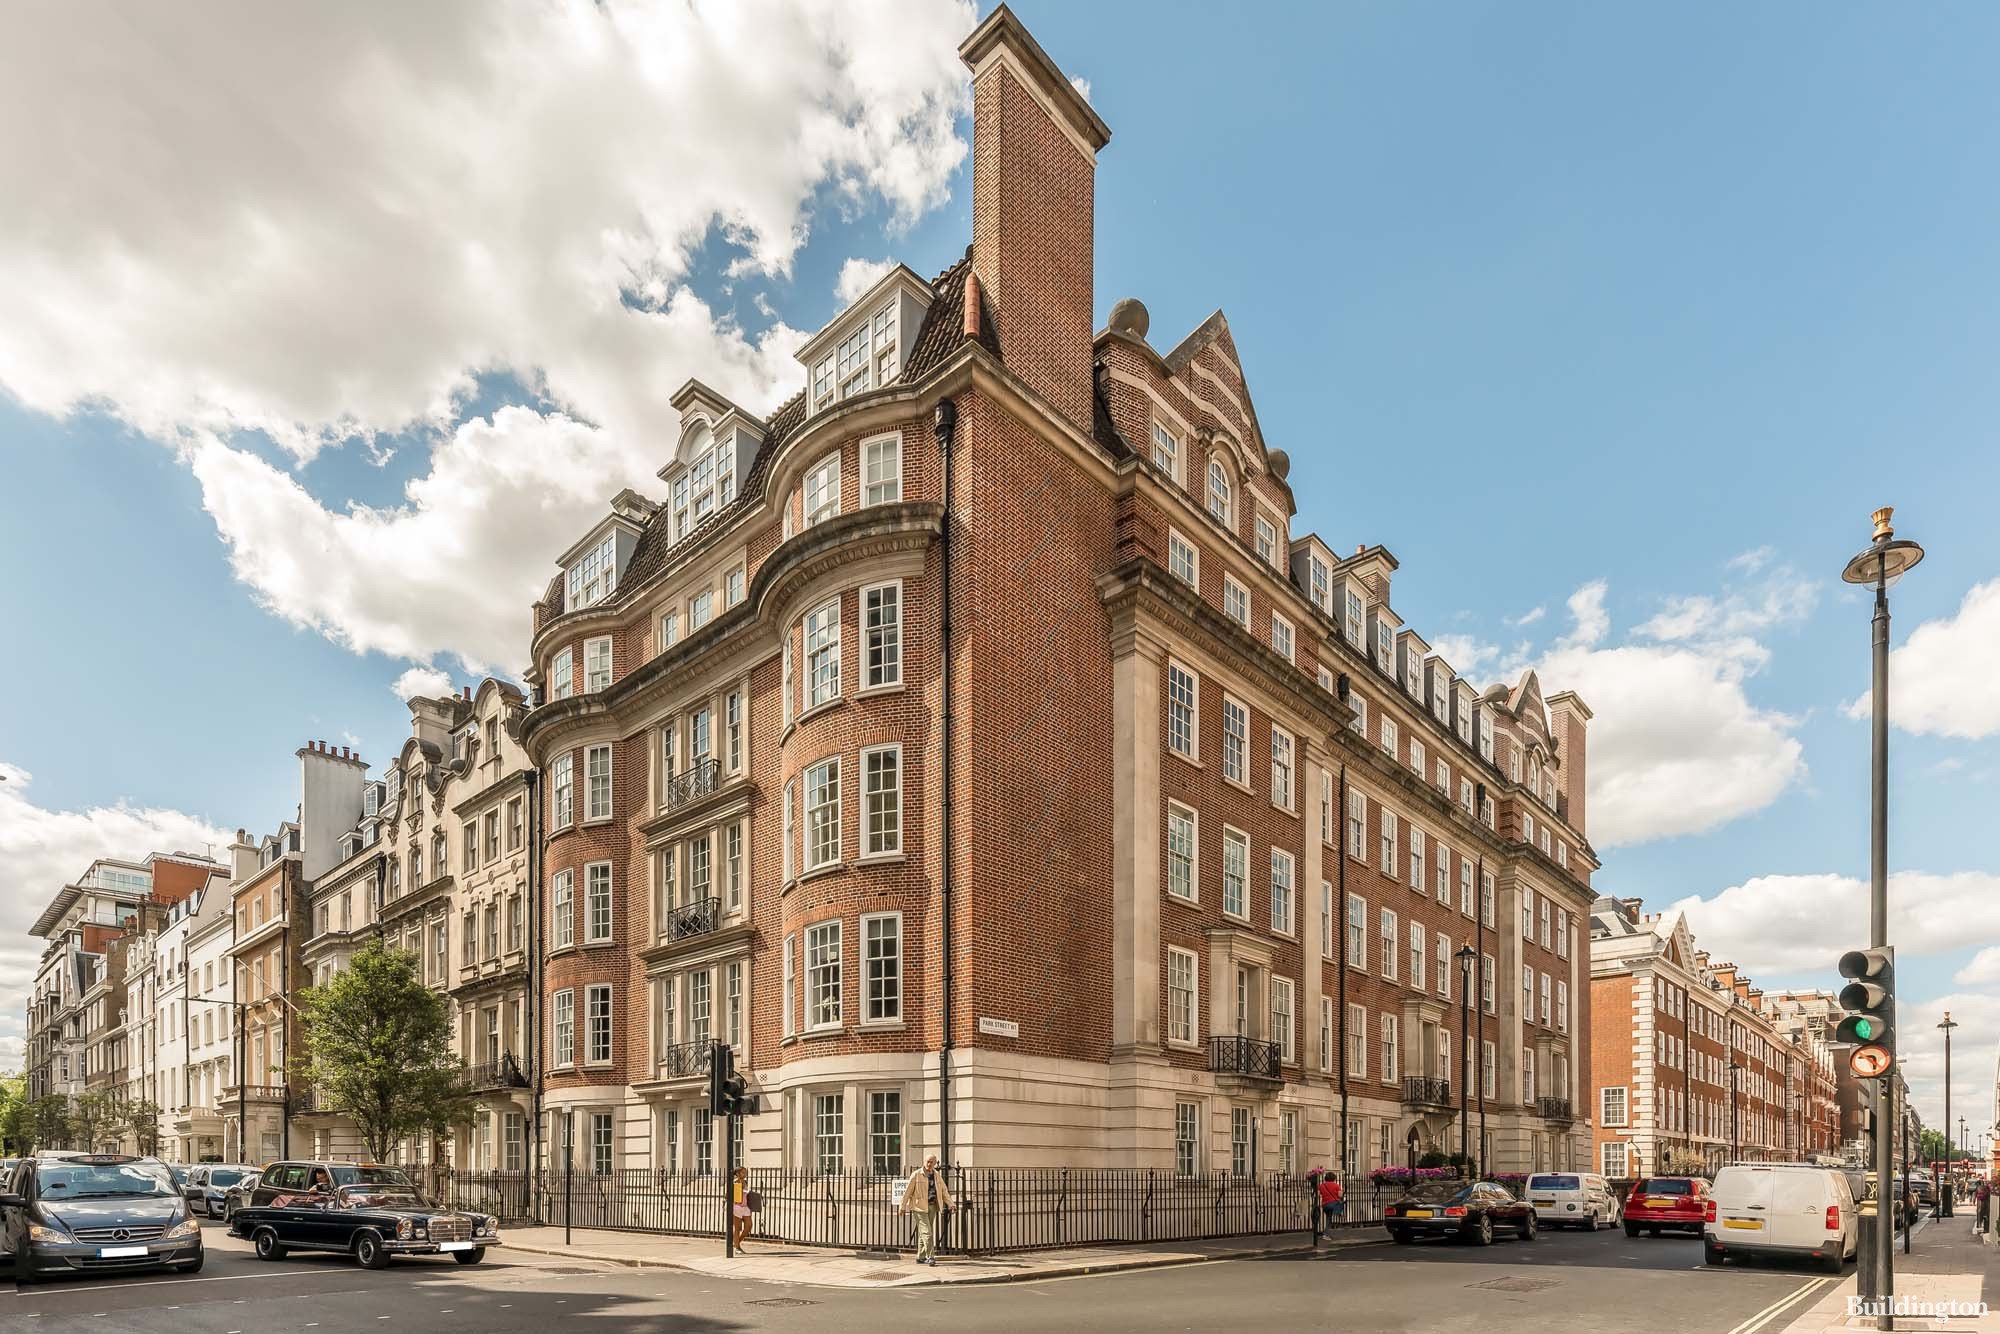 Upper Feilde building at 71 Park Street in Mayfair, London W1. 